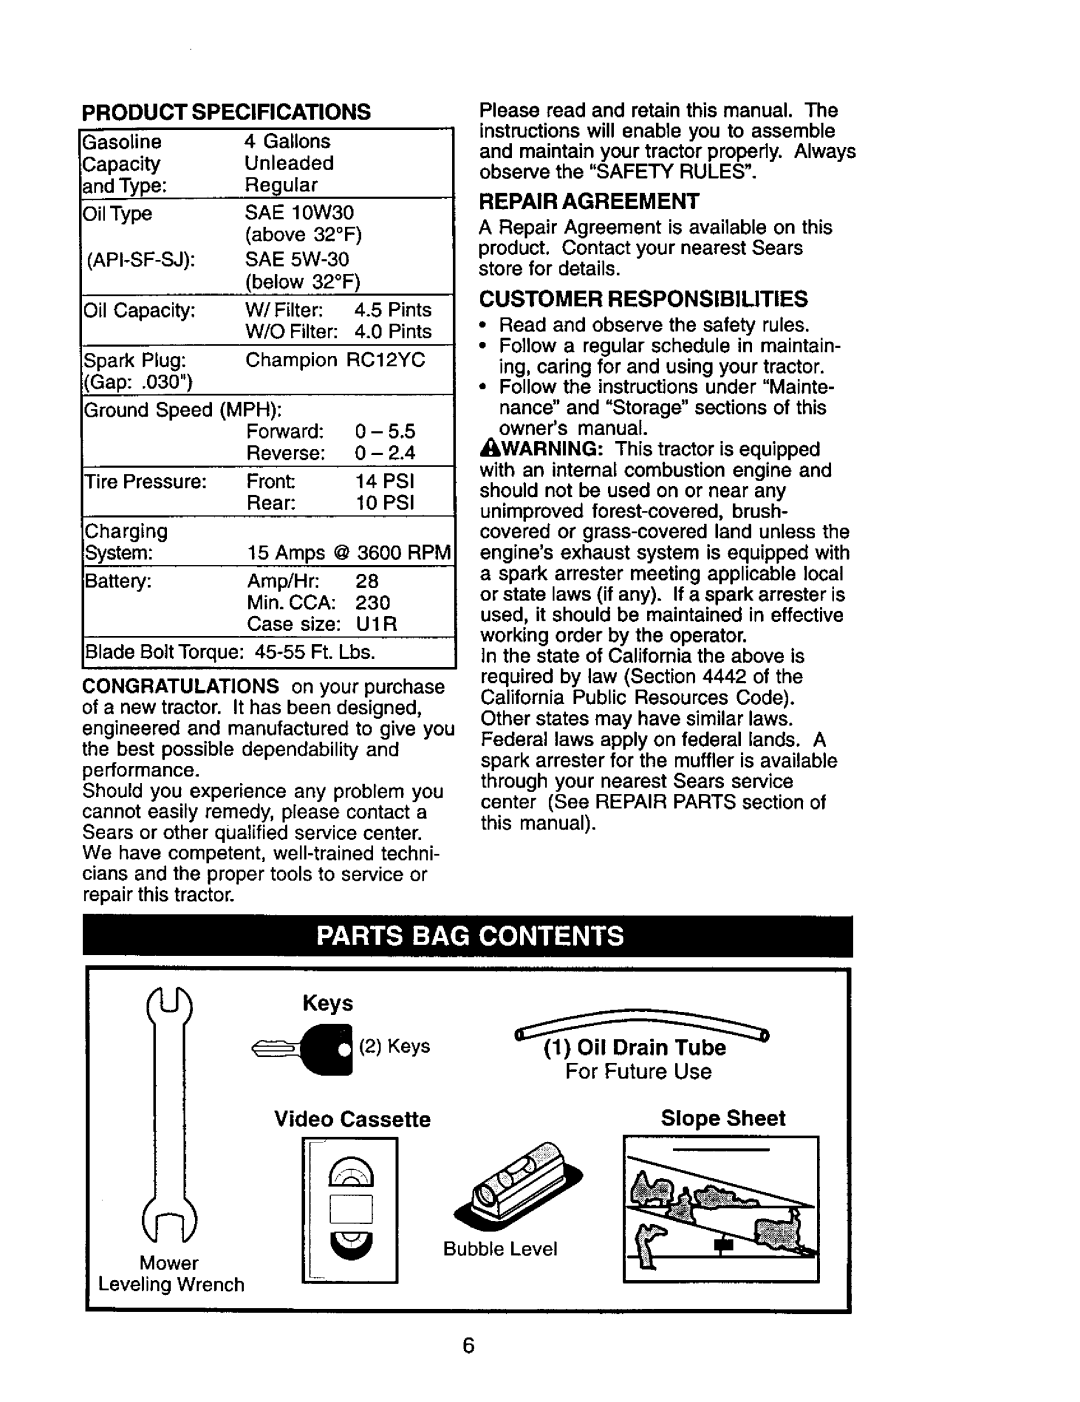 Craftsman 917.272247 Repair Agreement, For Future, Slope Sheet, Keys, Customer Responsibilities, Video Cassette 